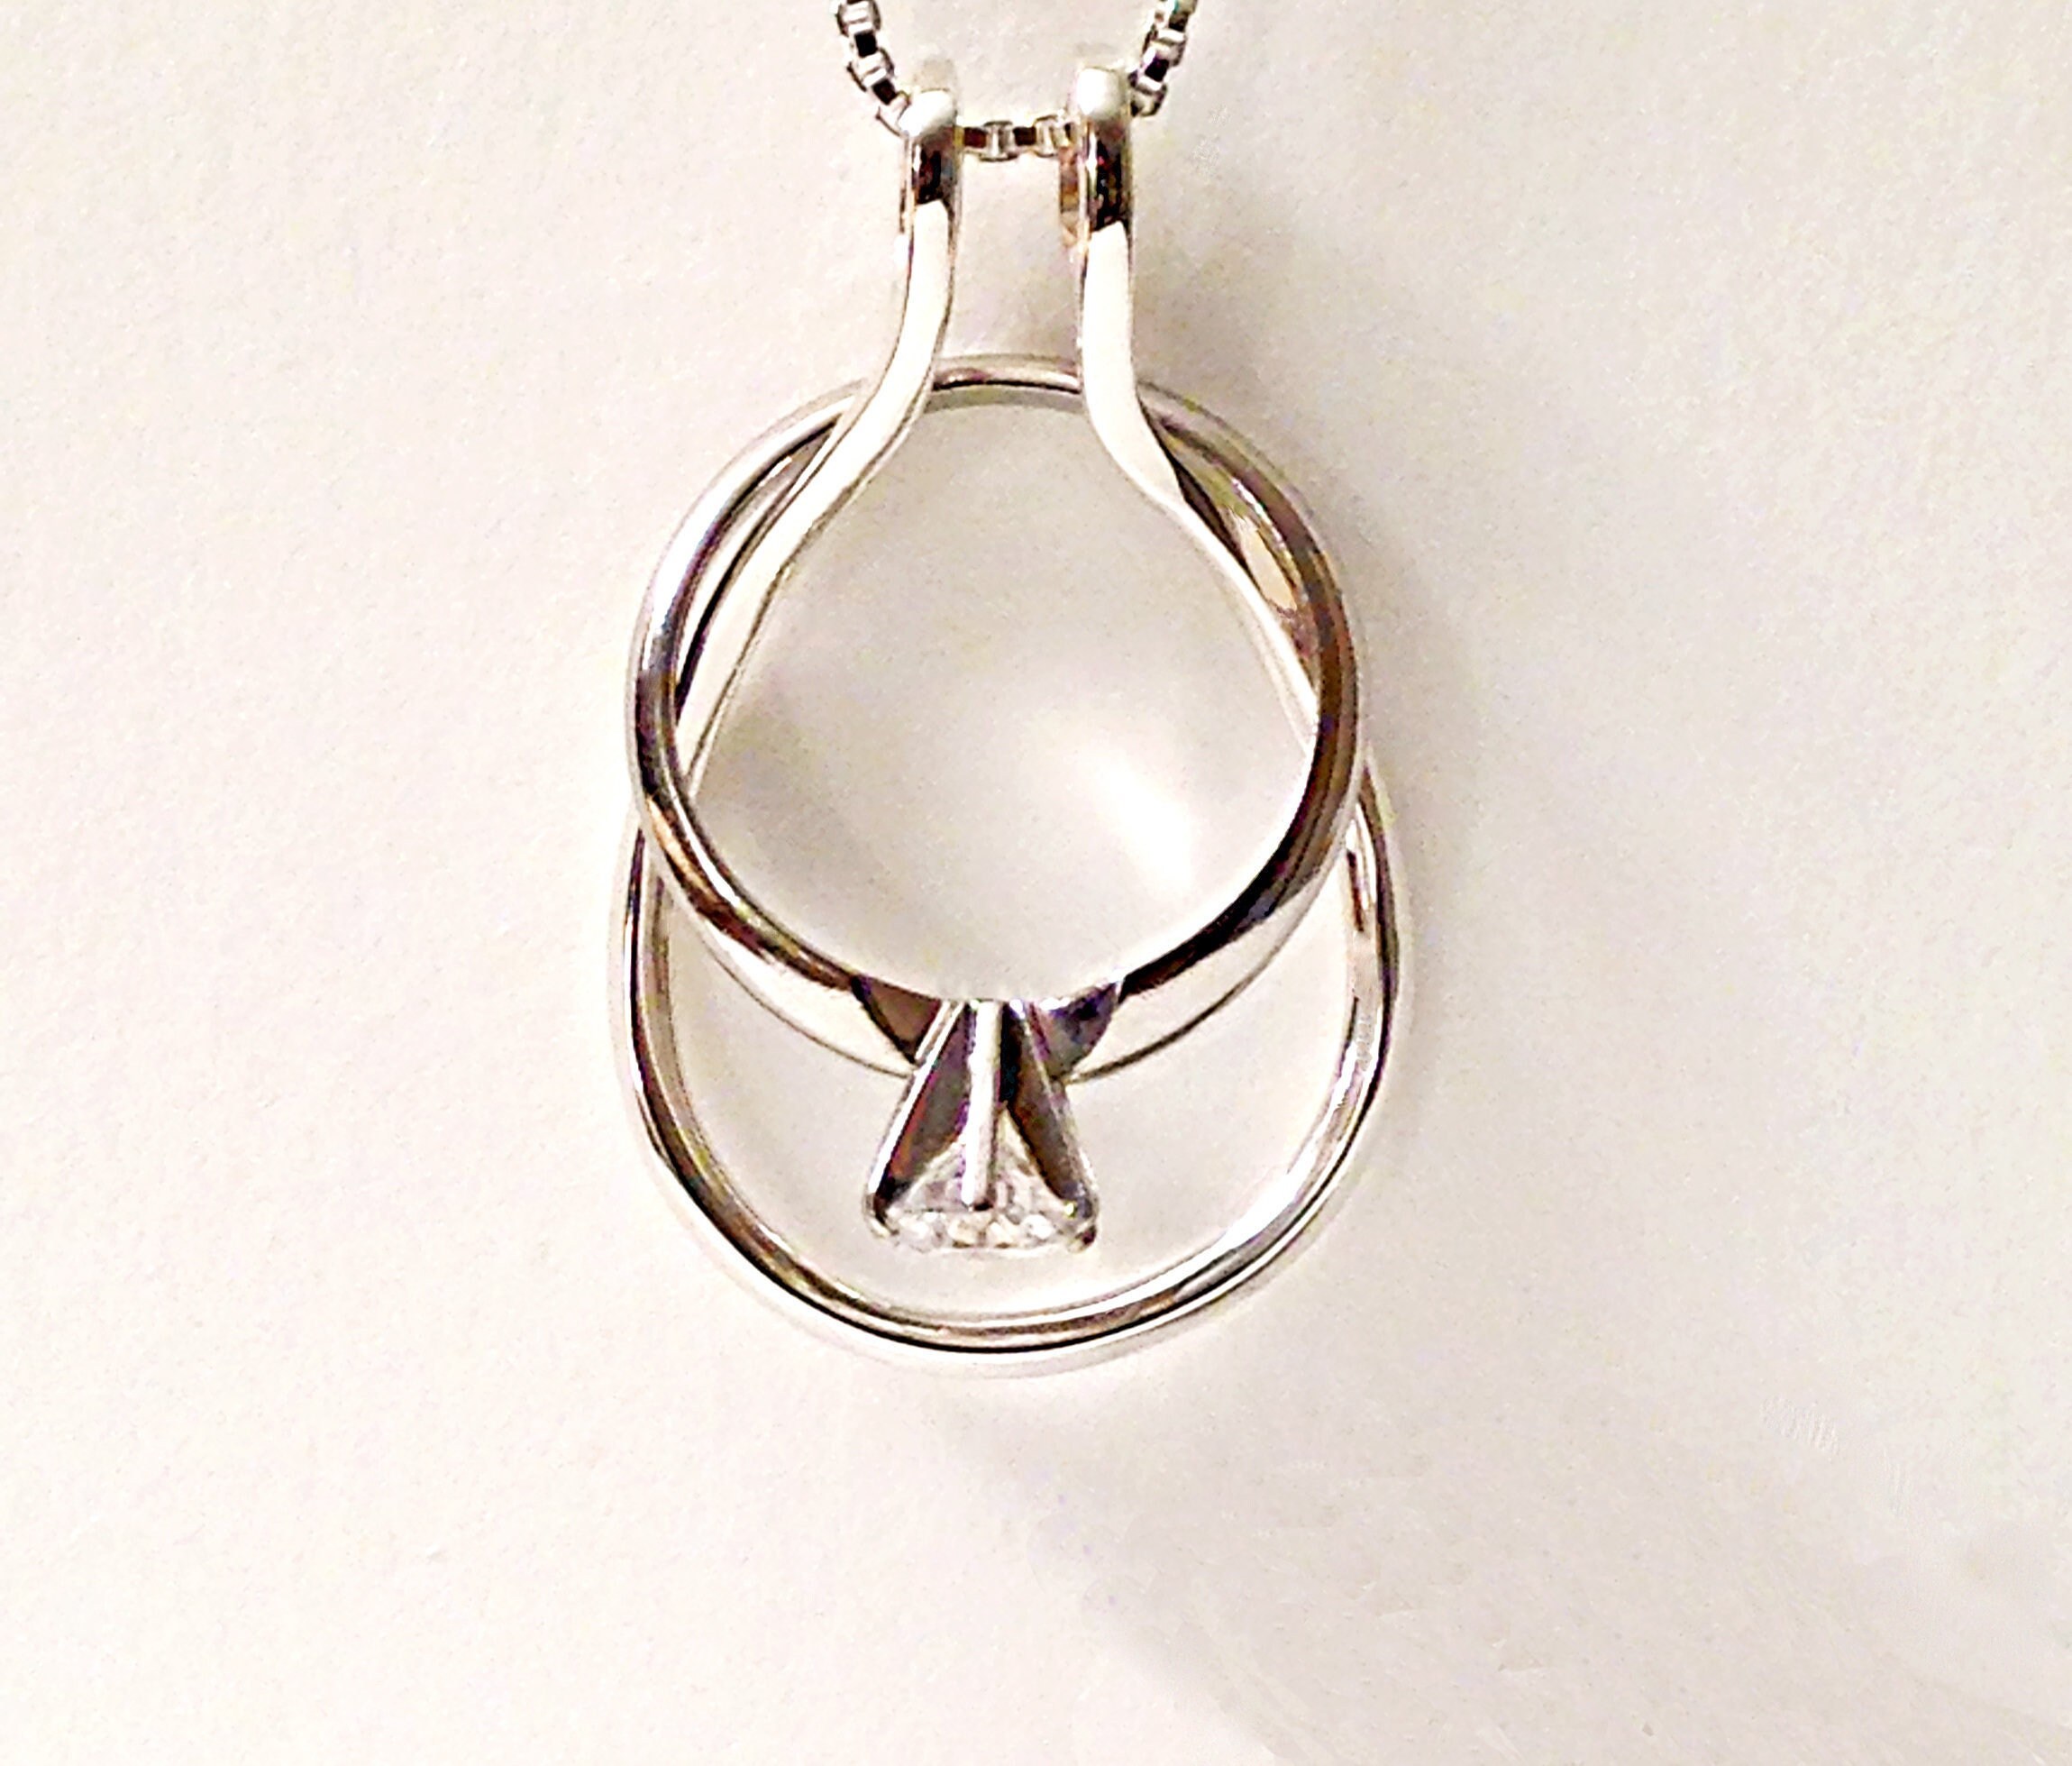 Interlocking Rings Necklace by Jane Hollinger - NEWTWIST